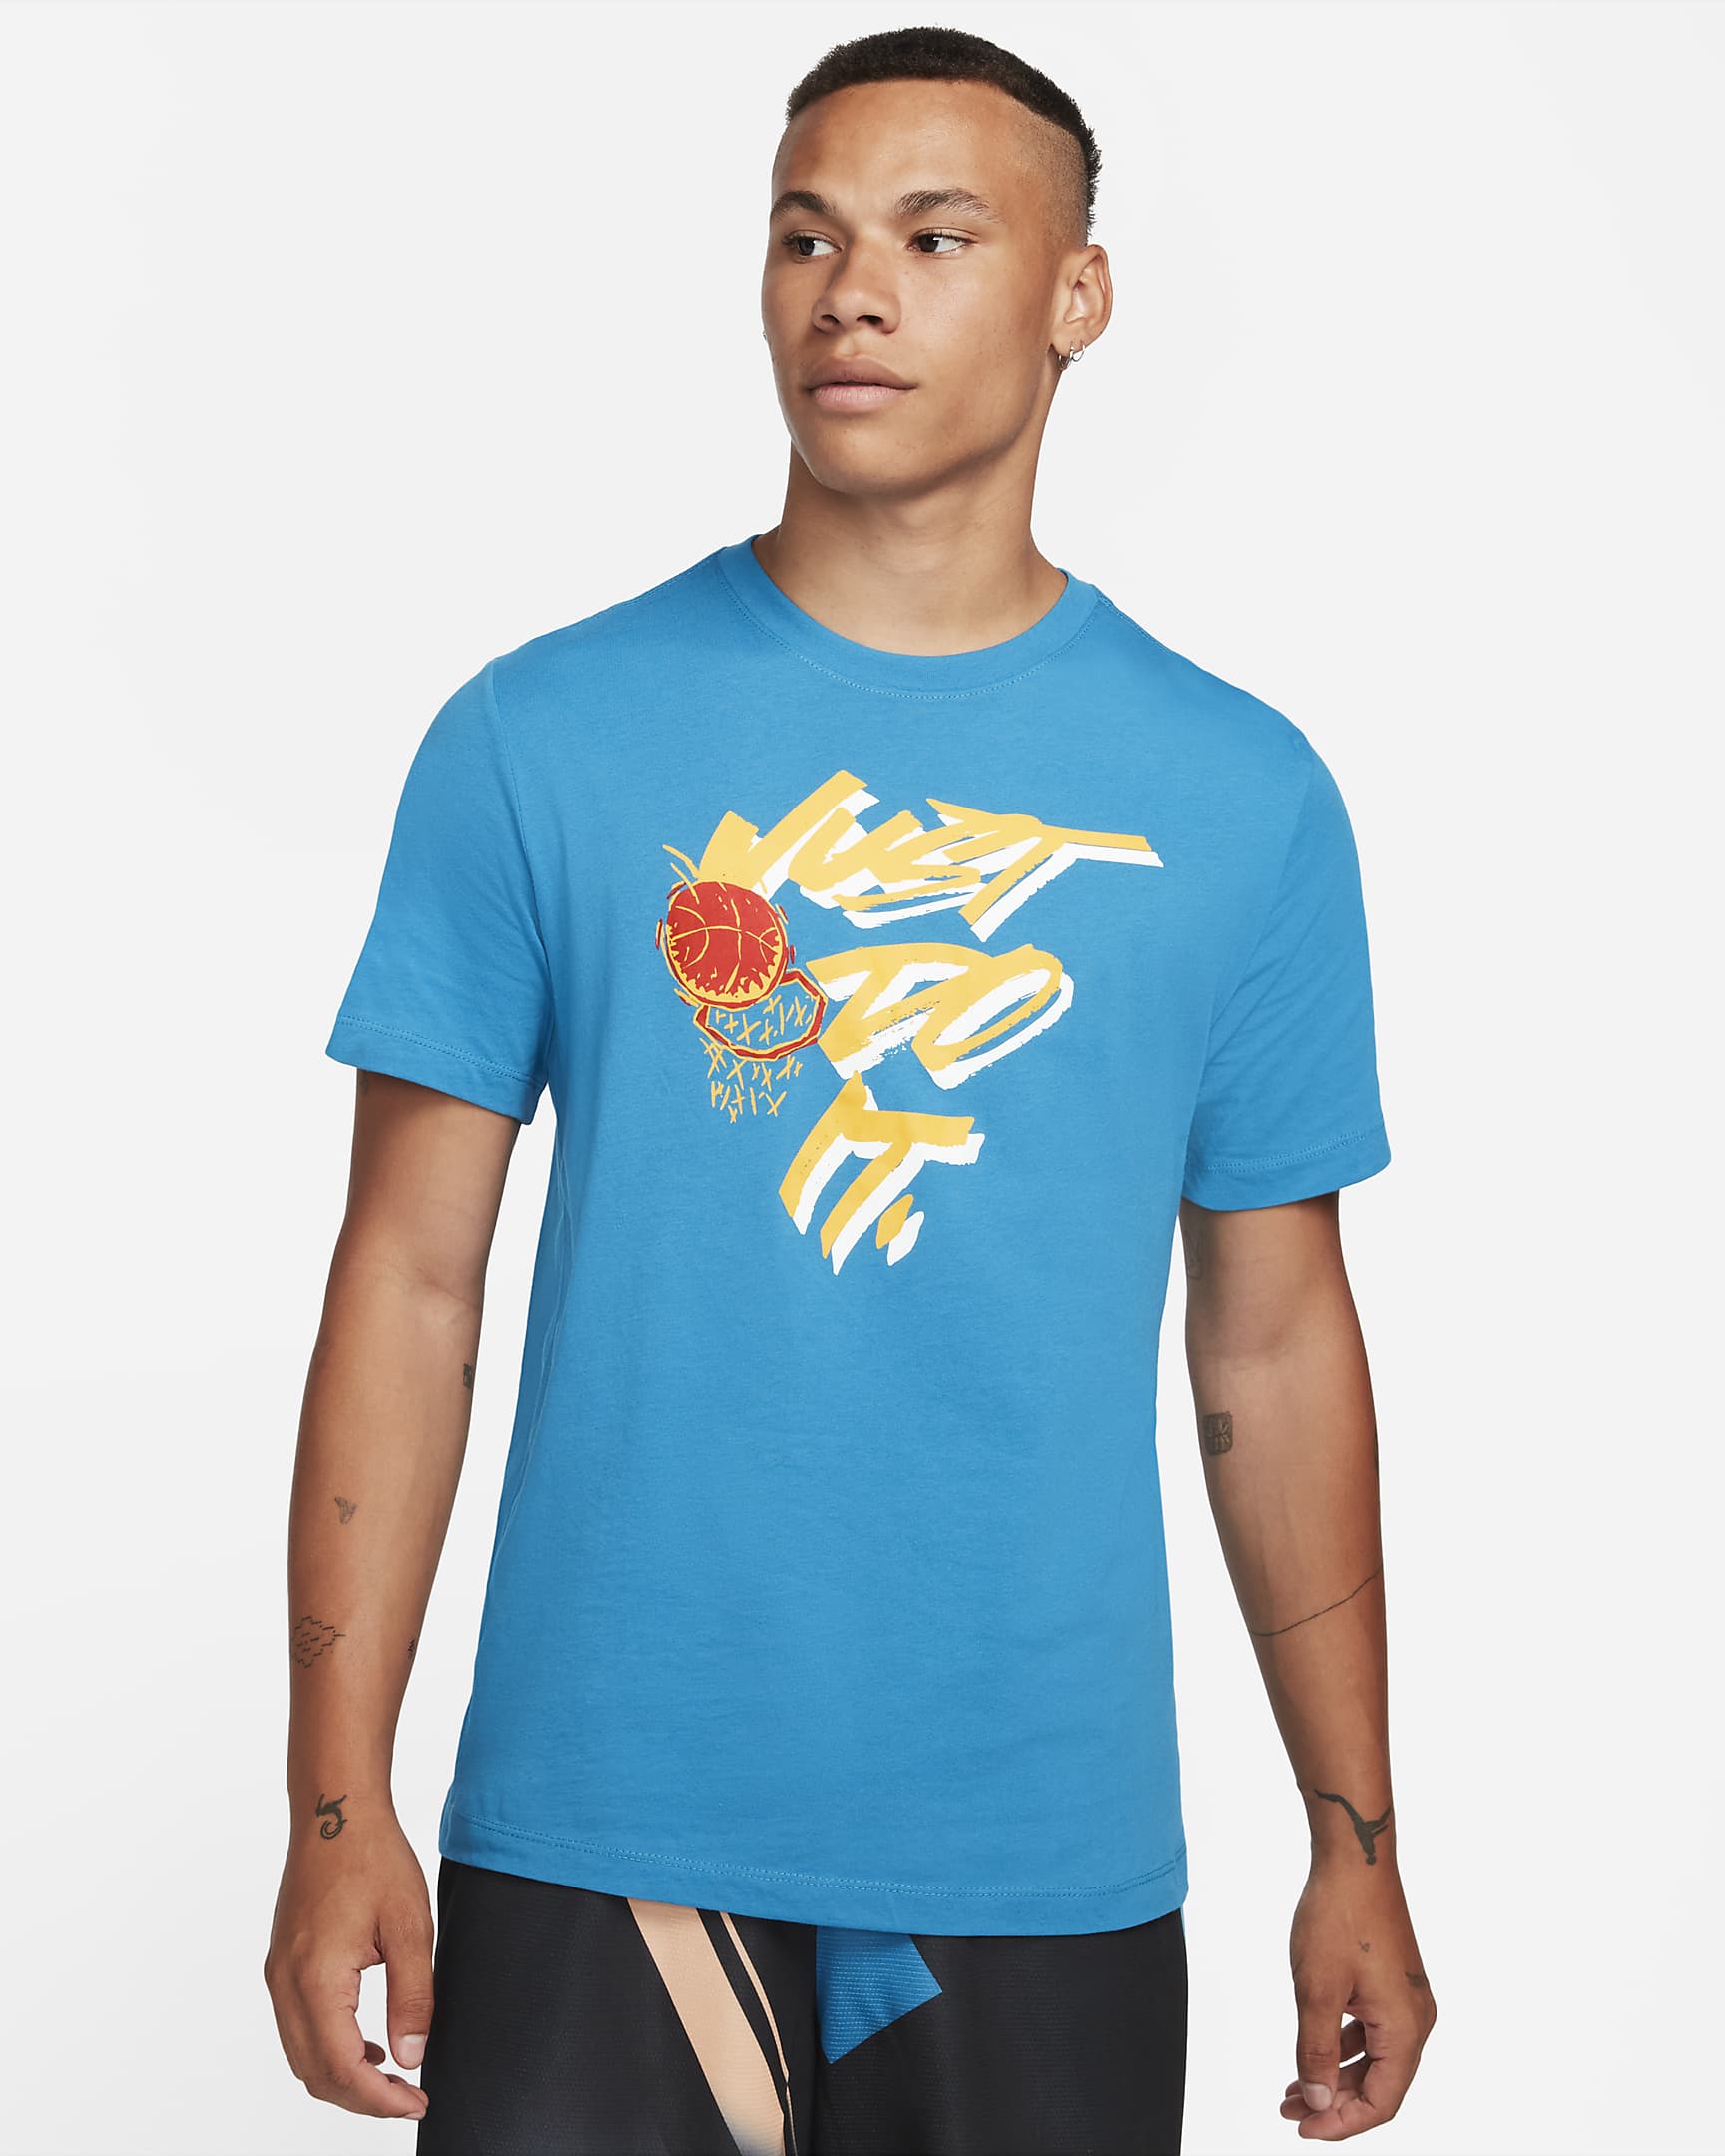 nike-just-do-it-mens-basketball-t-shirt-9hSSRN.png